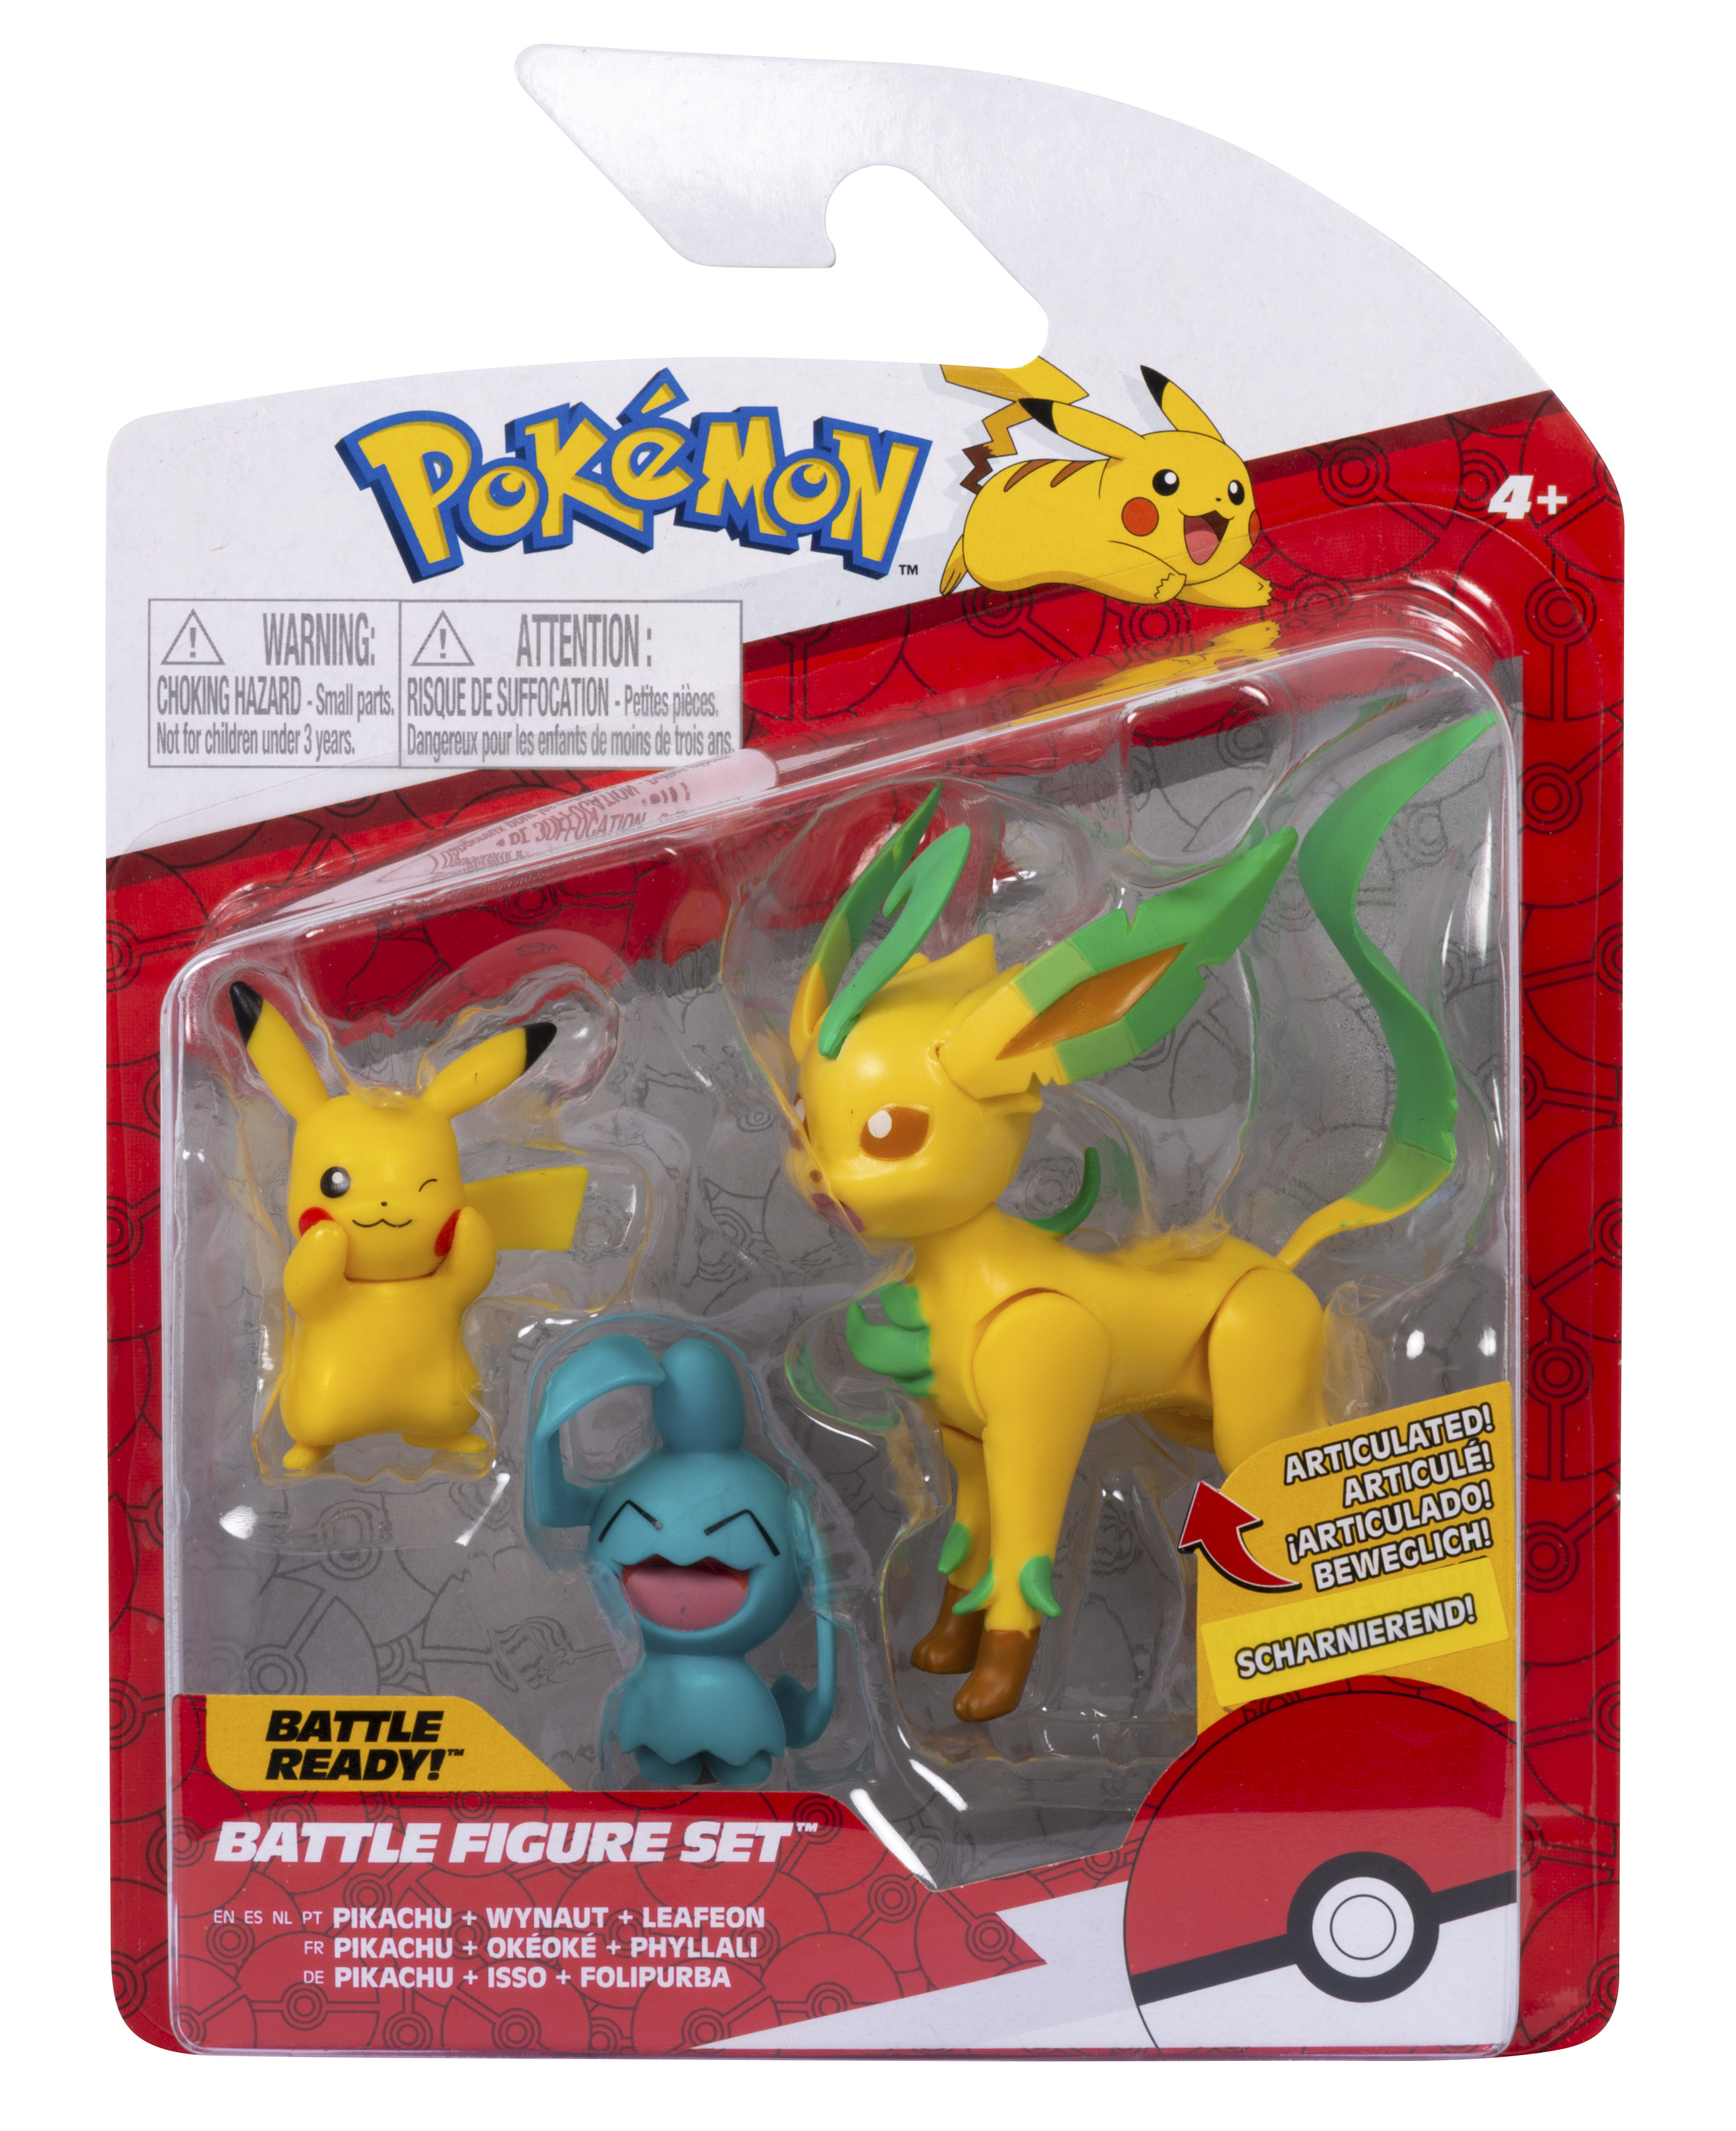 & Isso Pokémon - Battle Folipurba 3er Figur Pack Pikachu, -